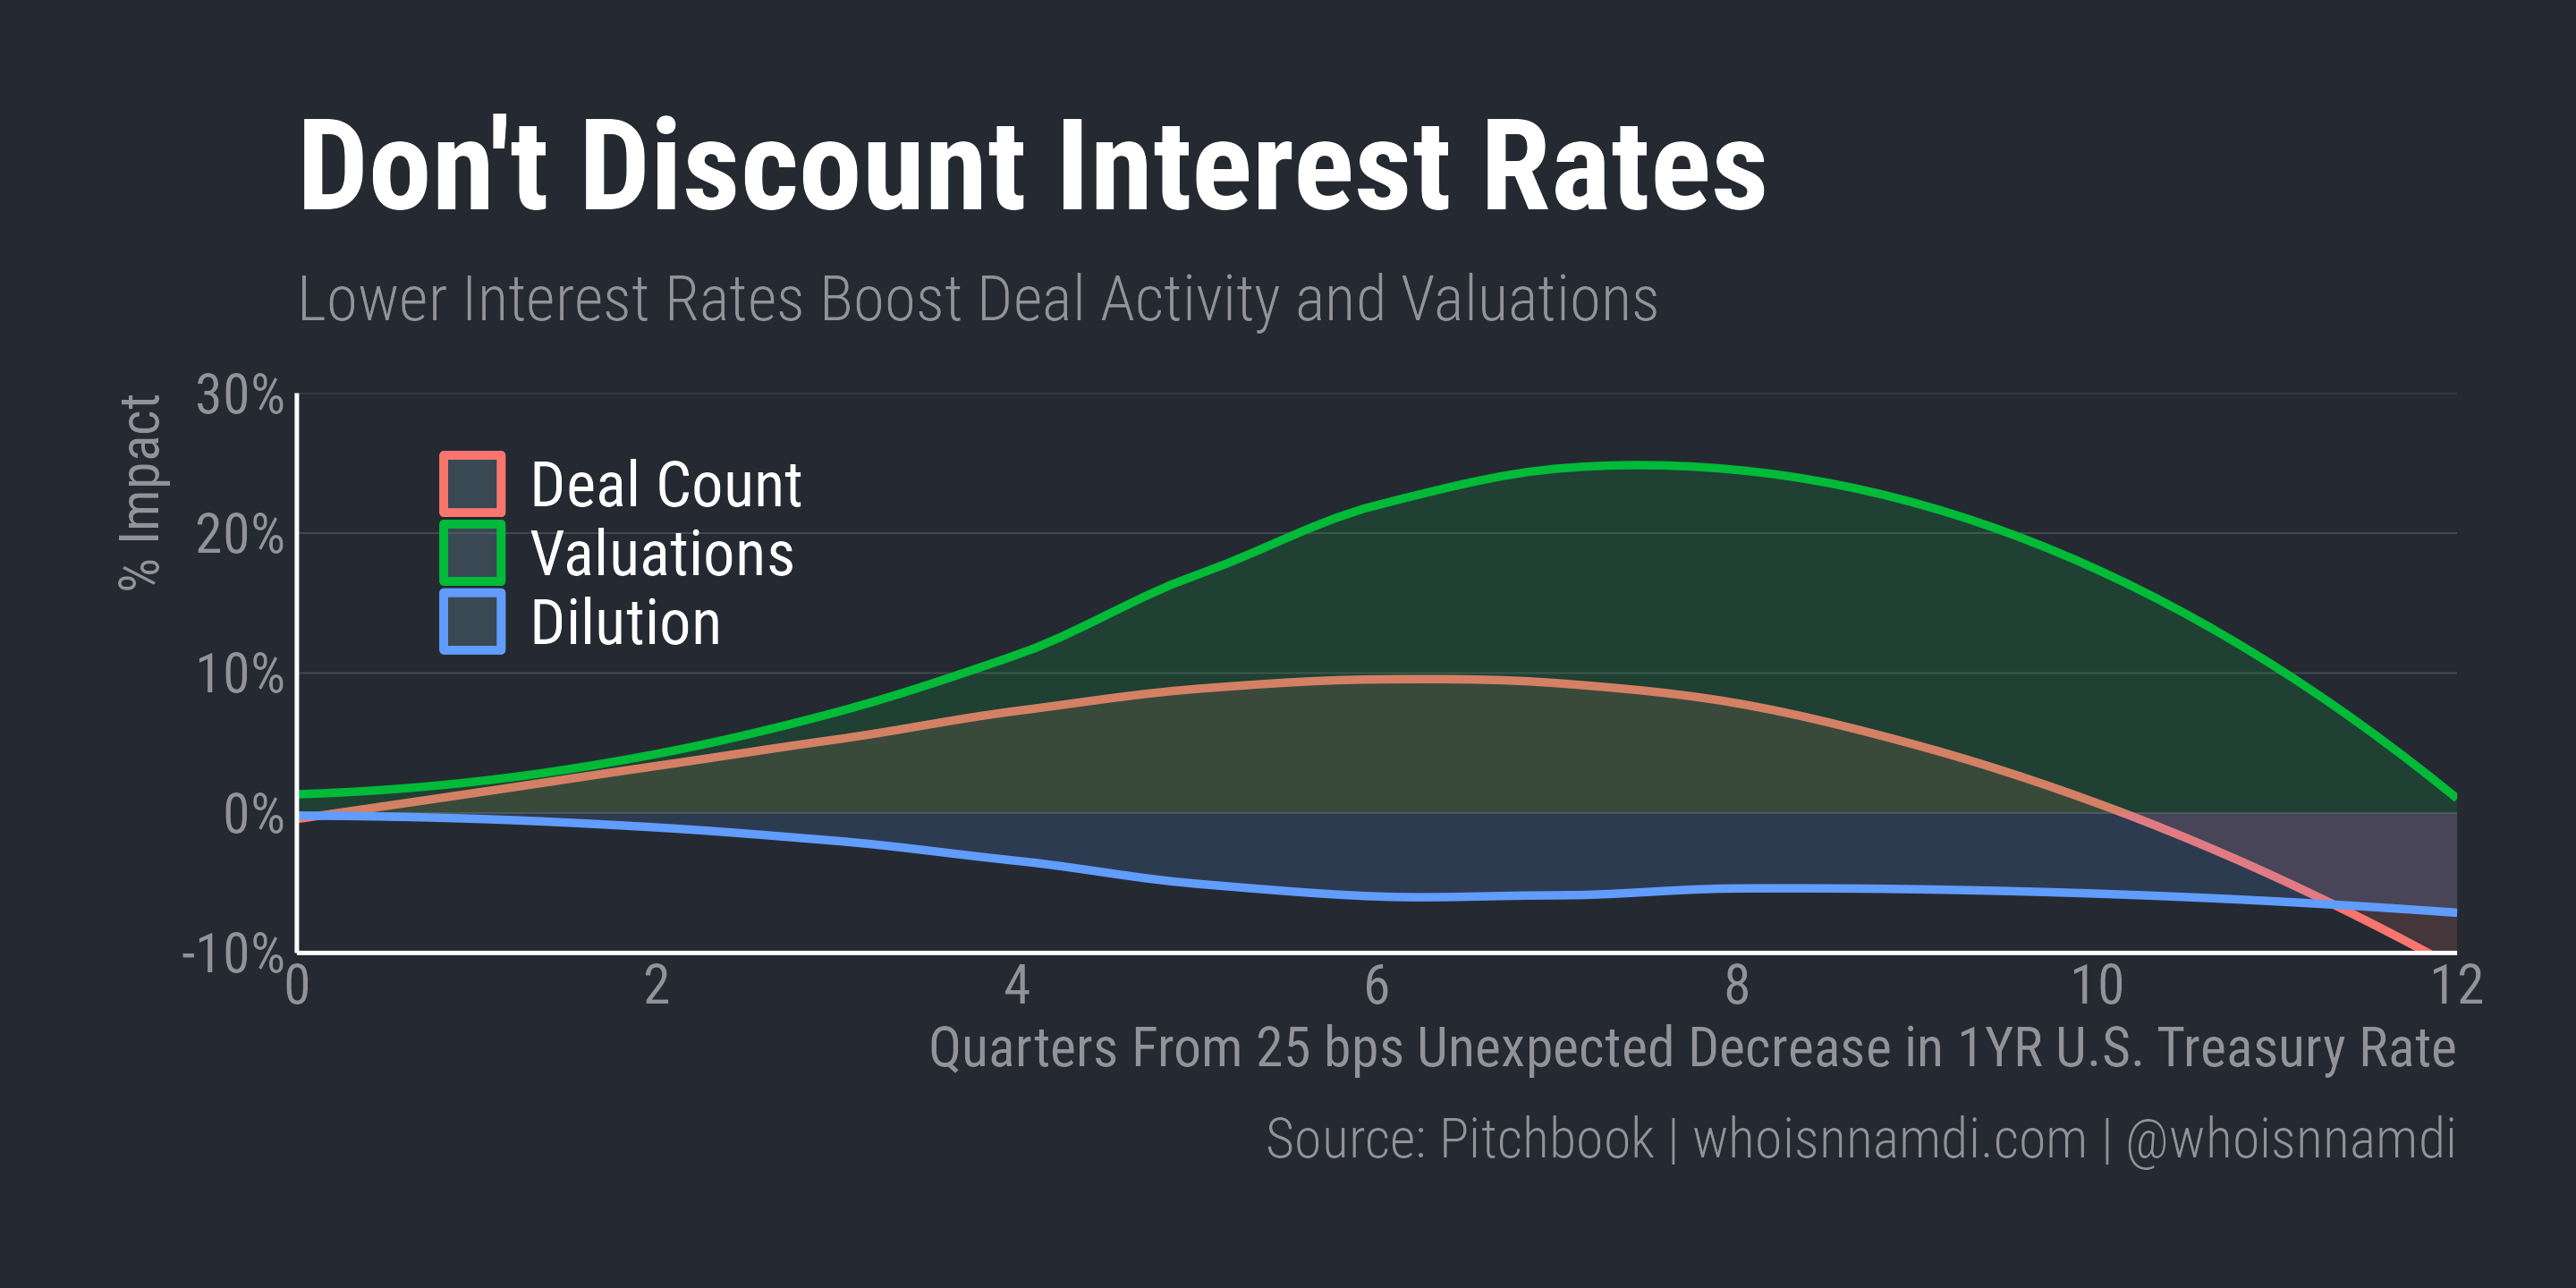 Don't Discount Interest Rates